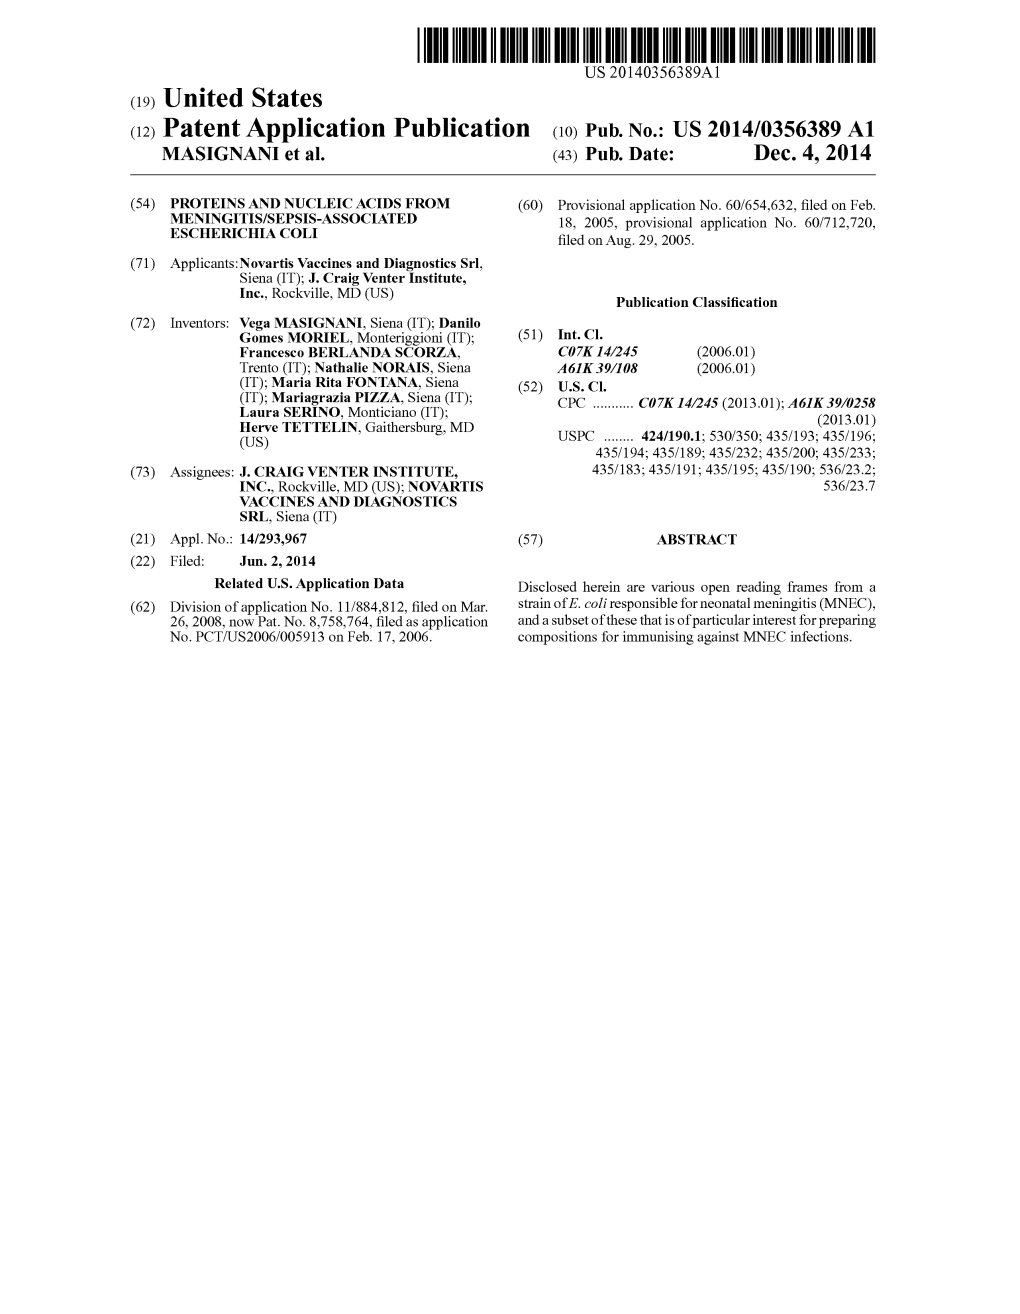 (12) Patent Application Publication (10) Pub. No.: US 2014/0356389 A1 MASIGNAN Et Al